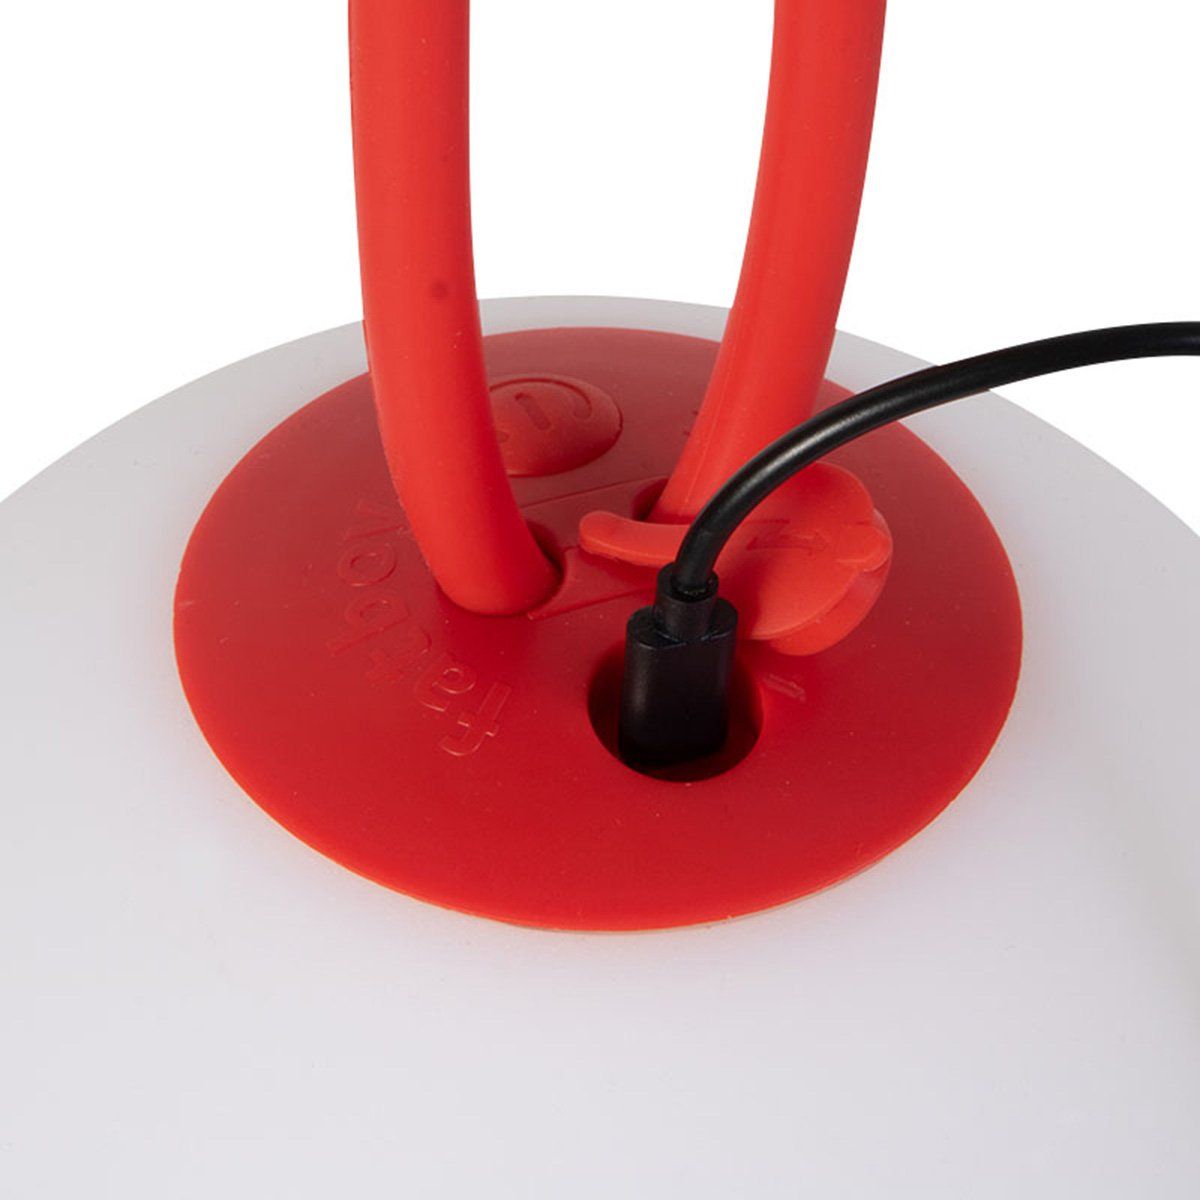 Lampe baladeuse extérieur LED BOLLEKE en polypropylène blanc anse rouge